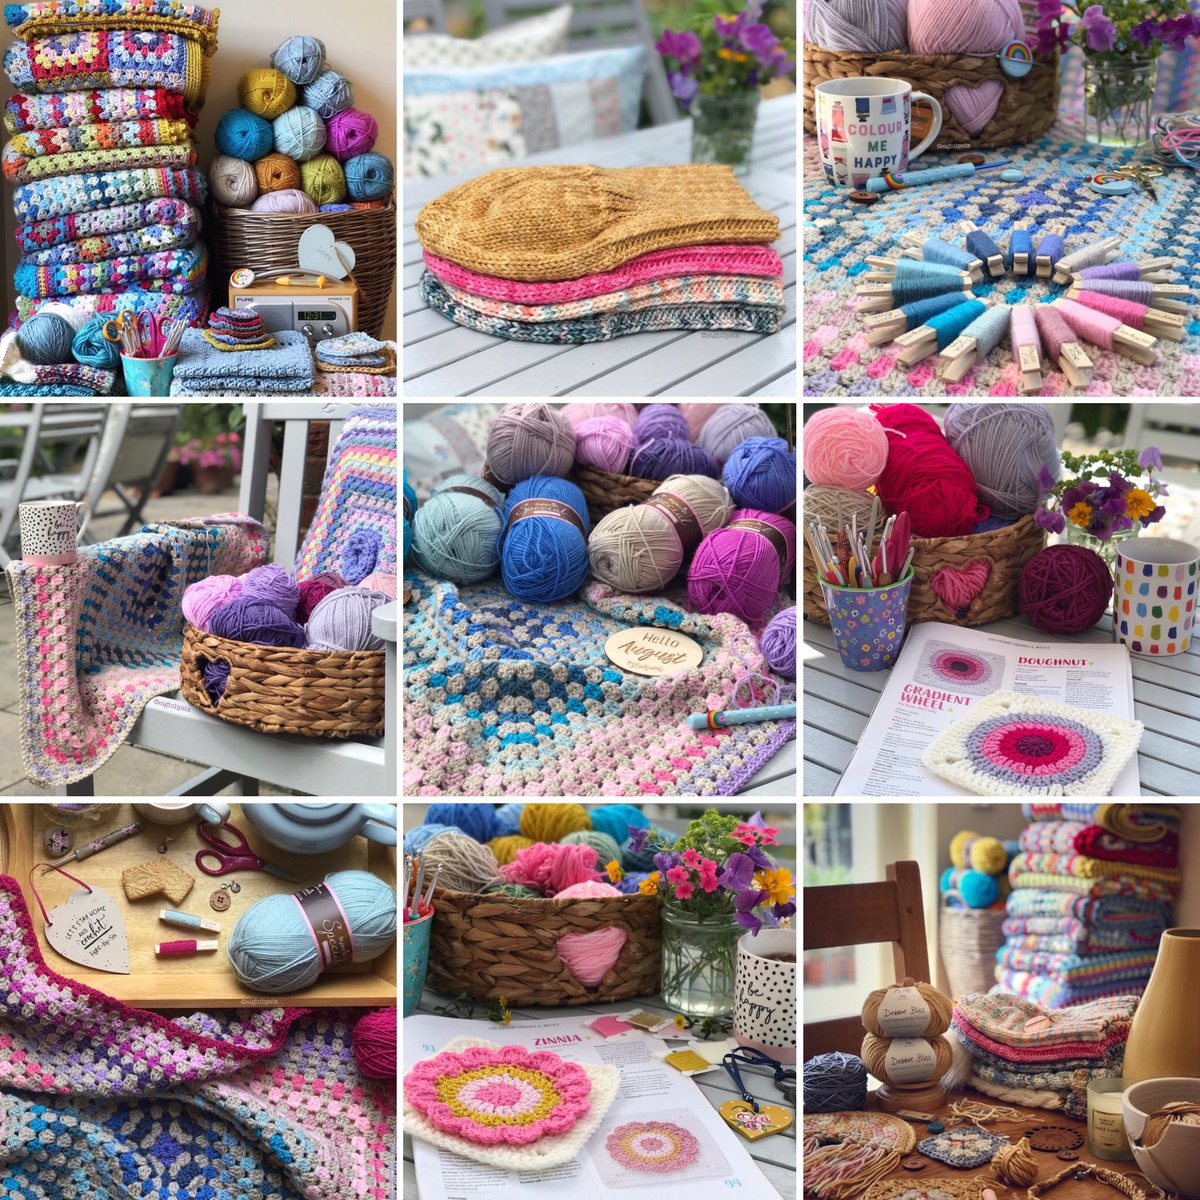 Goodbye August another colourful month #August2020 #crochet #knittedhat #handknit #grannysquareday2020 #colourmehappy @StylecraftYarn